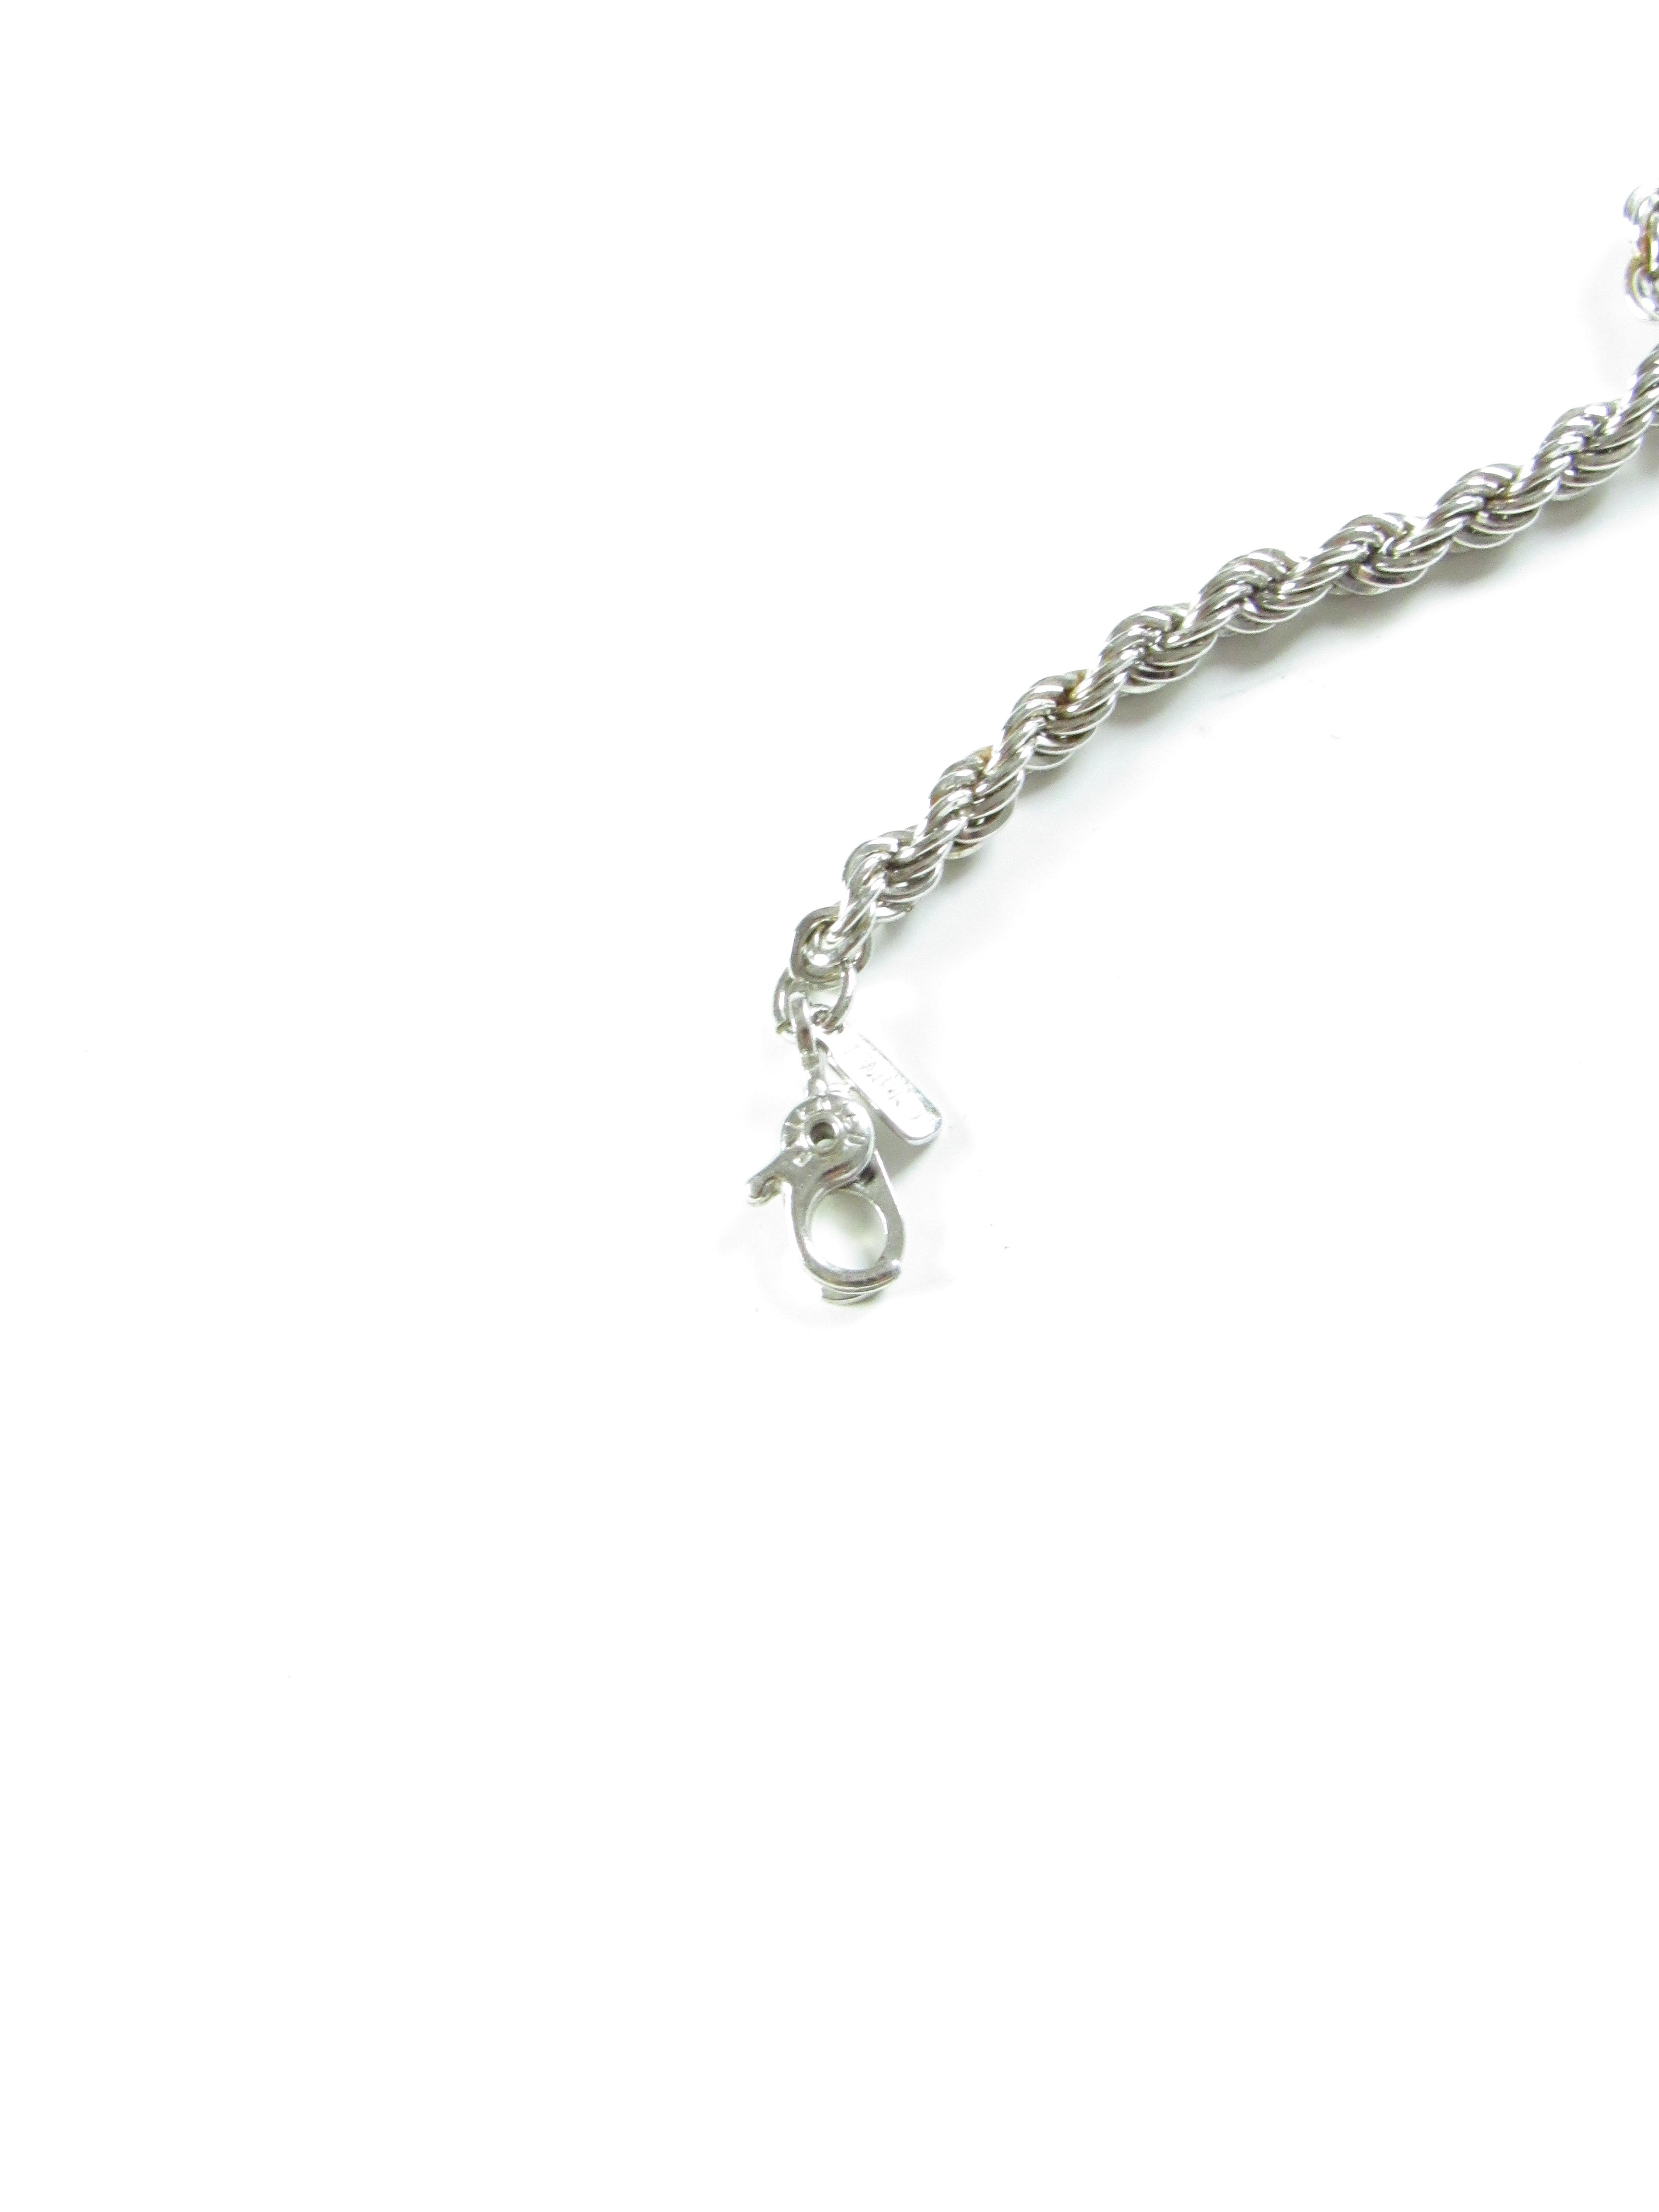 Monet Rope Chain Silver Bracelet